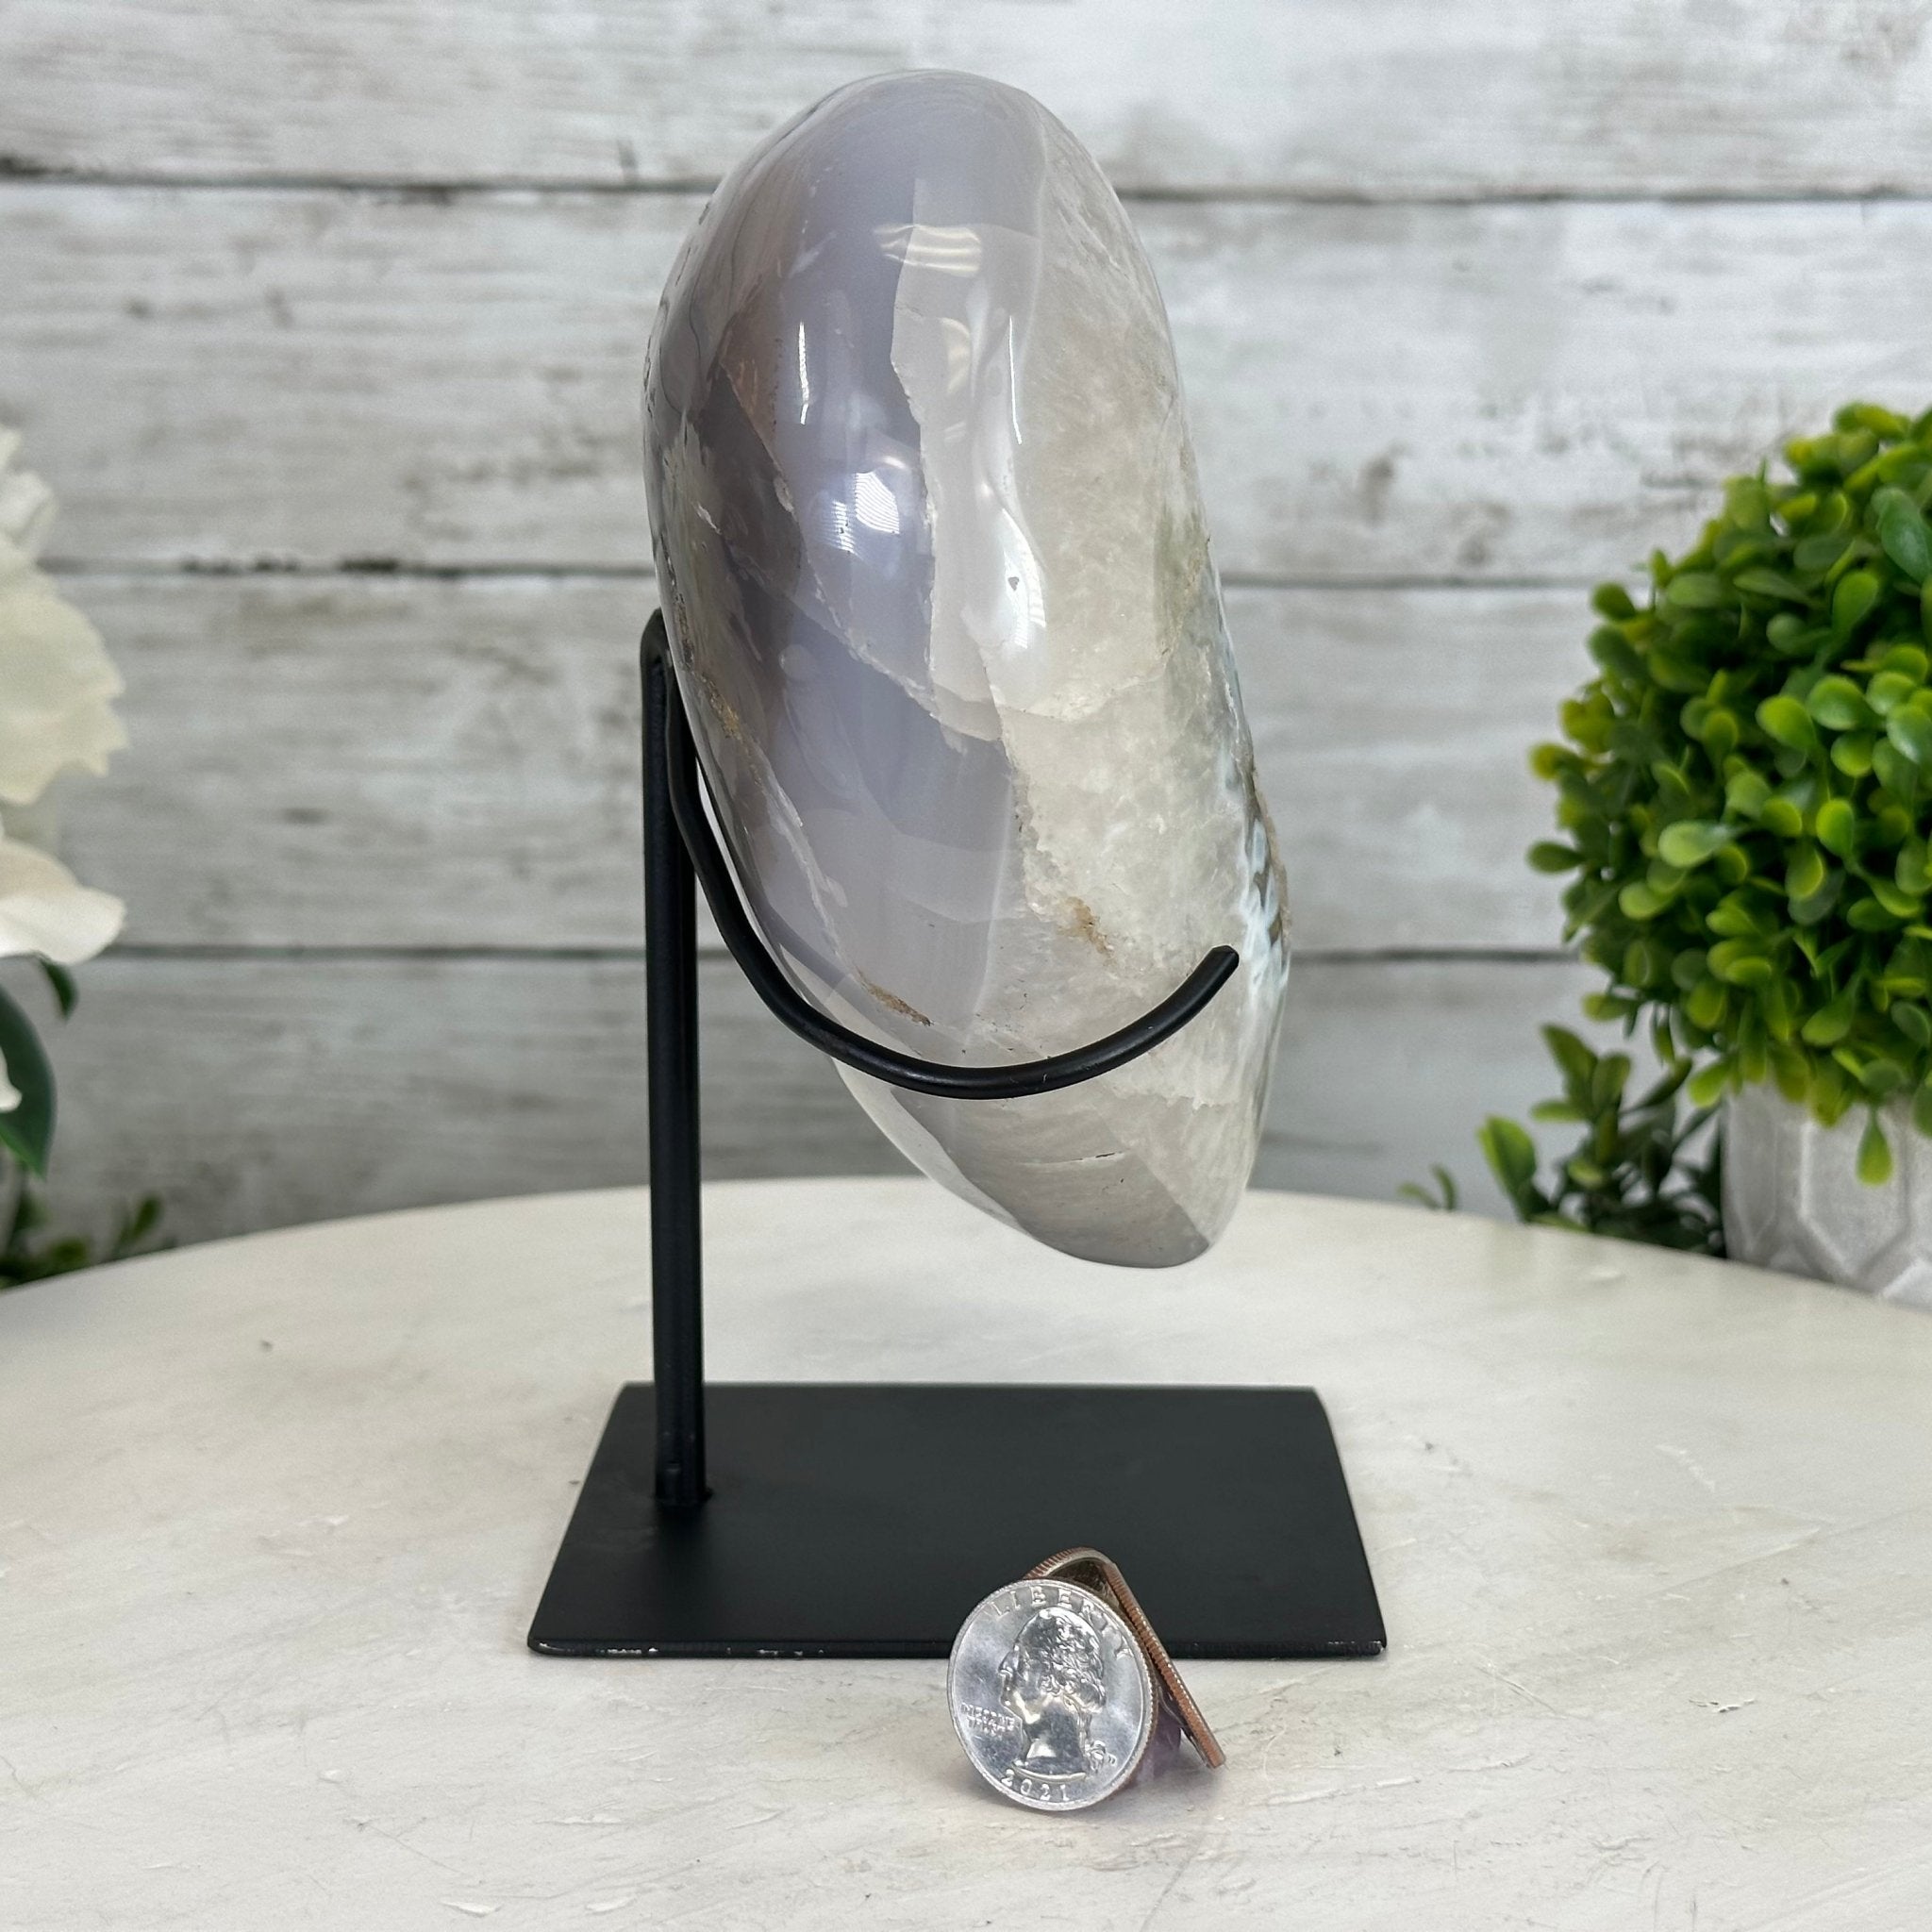 Polished Agate Heart Geode on a Metal Stand, 5.4 lbs & 7.5" Tall, Model #5468-0074 by Brazil Gems - Brazil GemsBrazil GemsPolished Agate Heart Geode on a Metal Stand, 5.4 lbs & 7.5" Tall, Model #5468-0074 by Brazil GemsHearts5468-0074